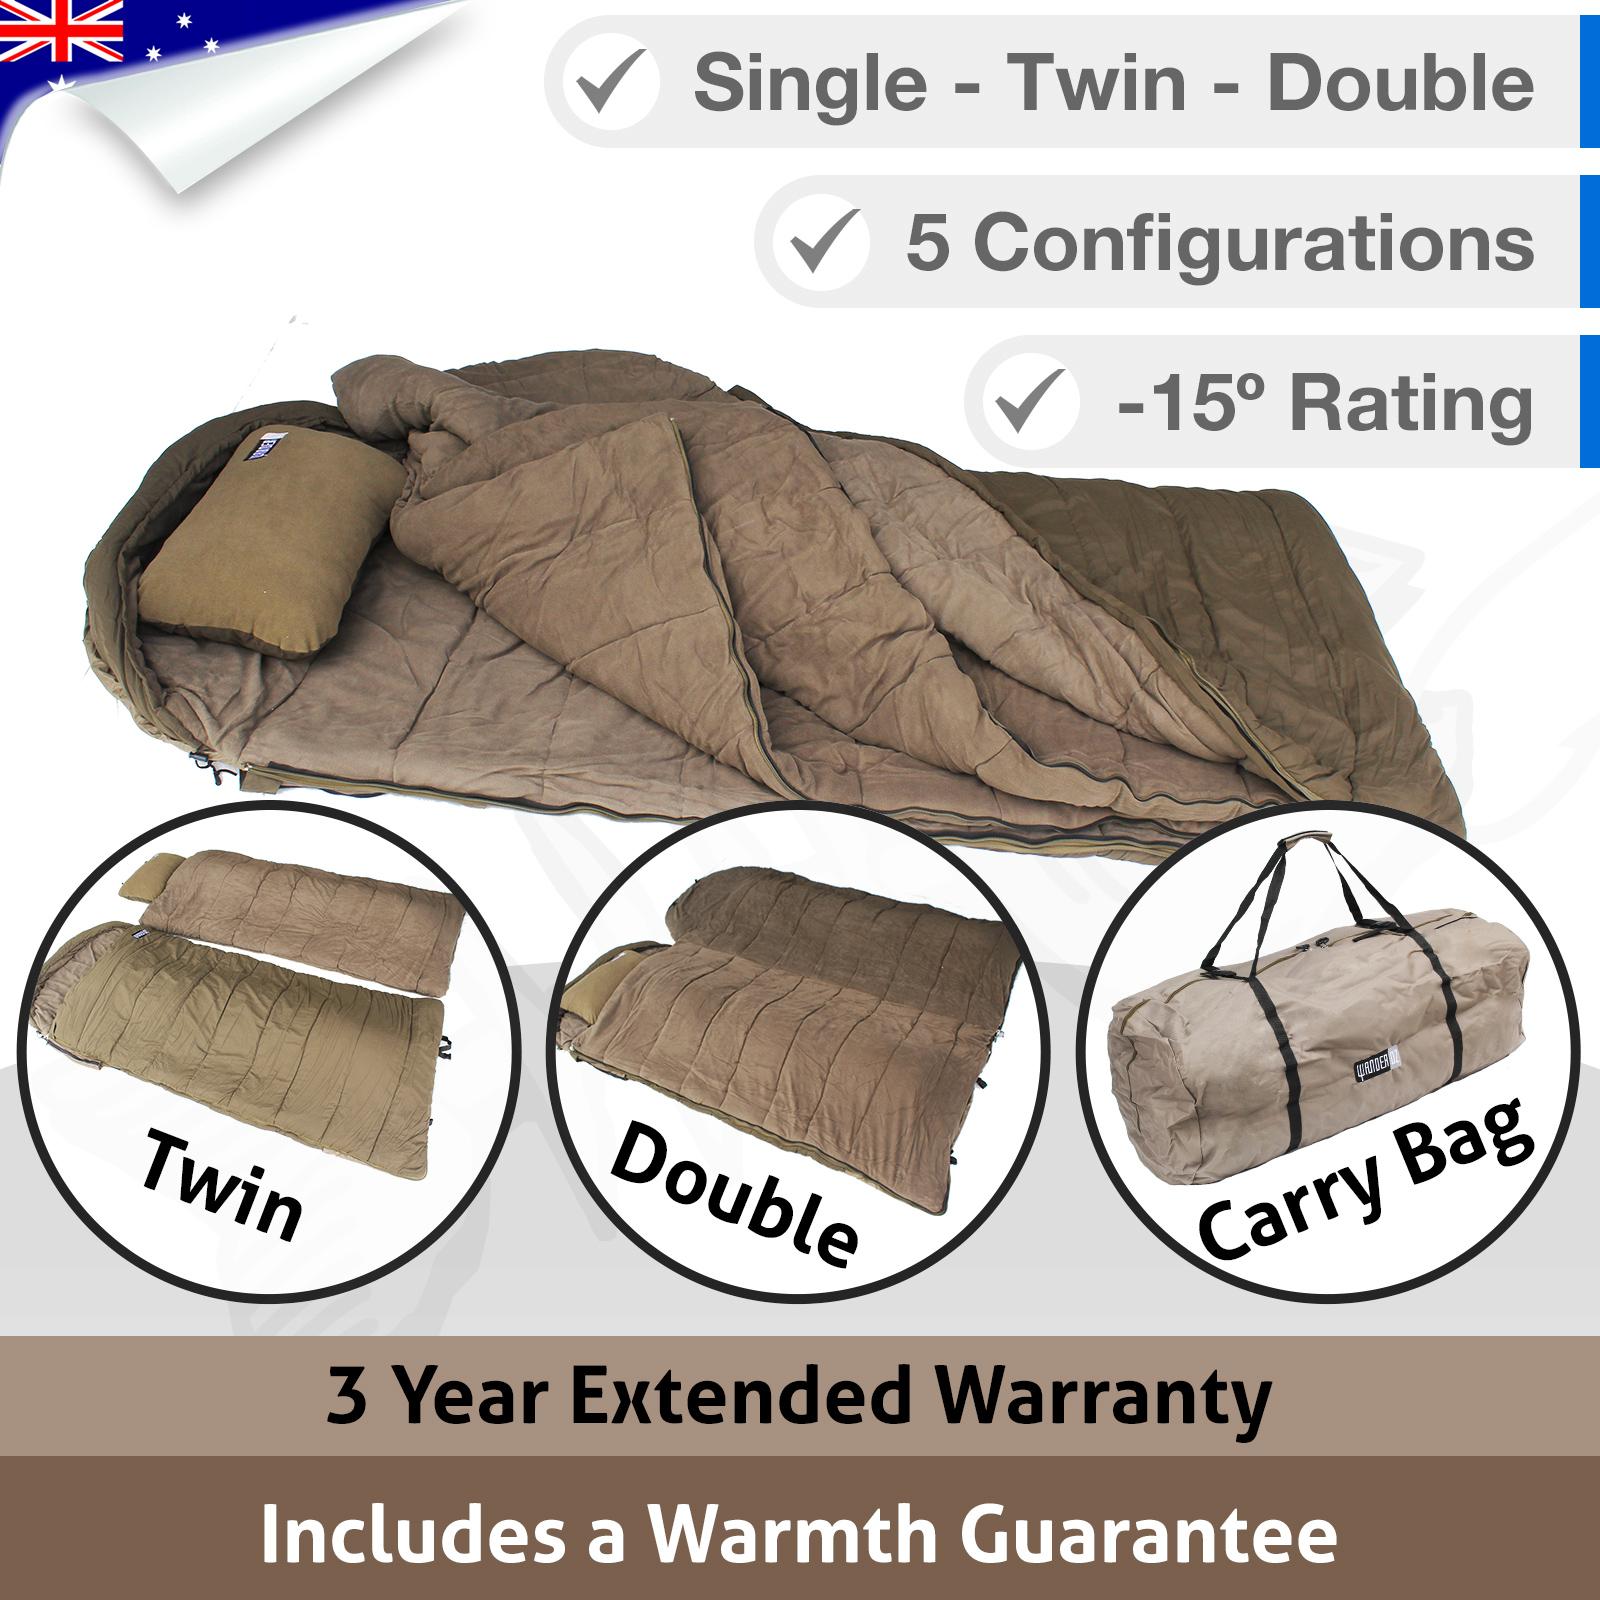 Deluxe DOUBLE Outdoor Camping Sleeping Bag Winter Twin -15